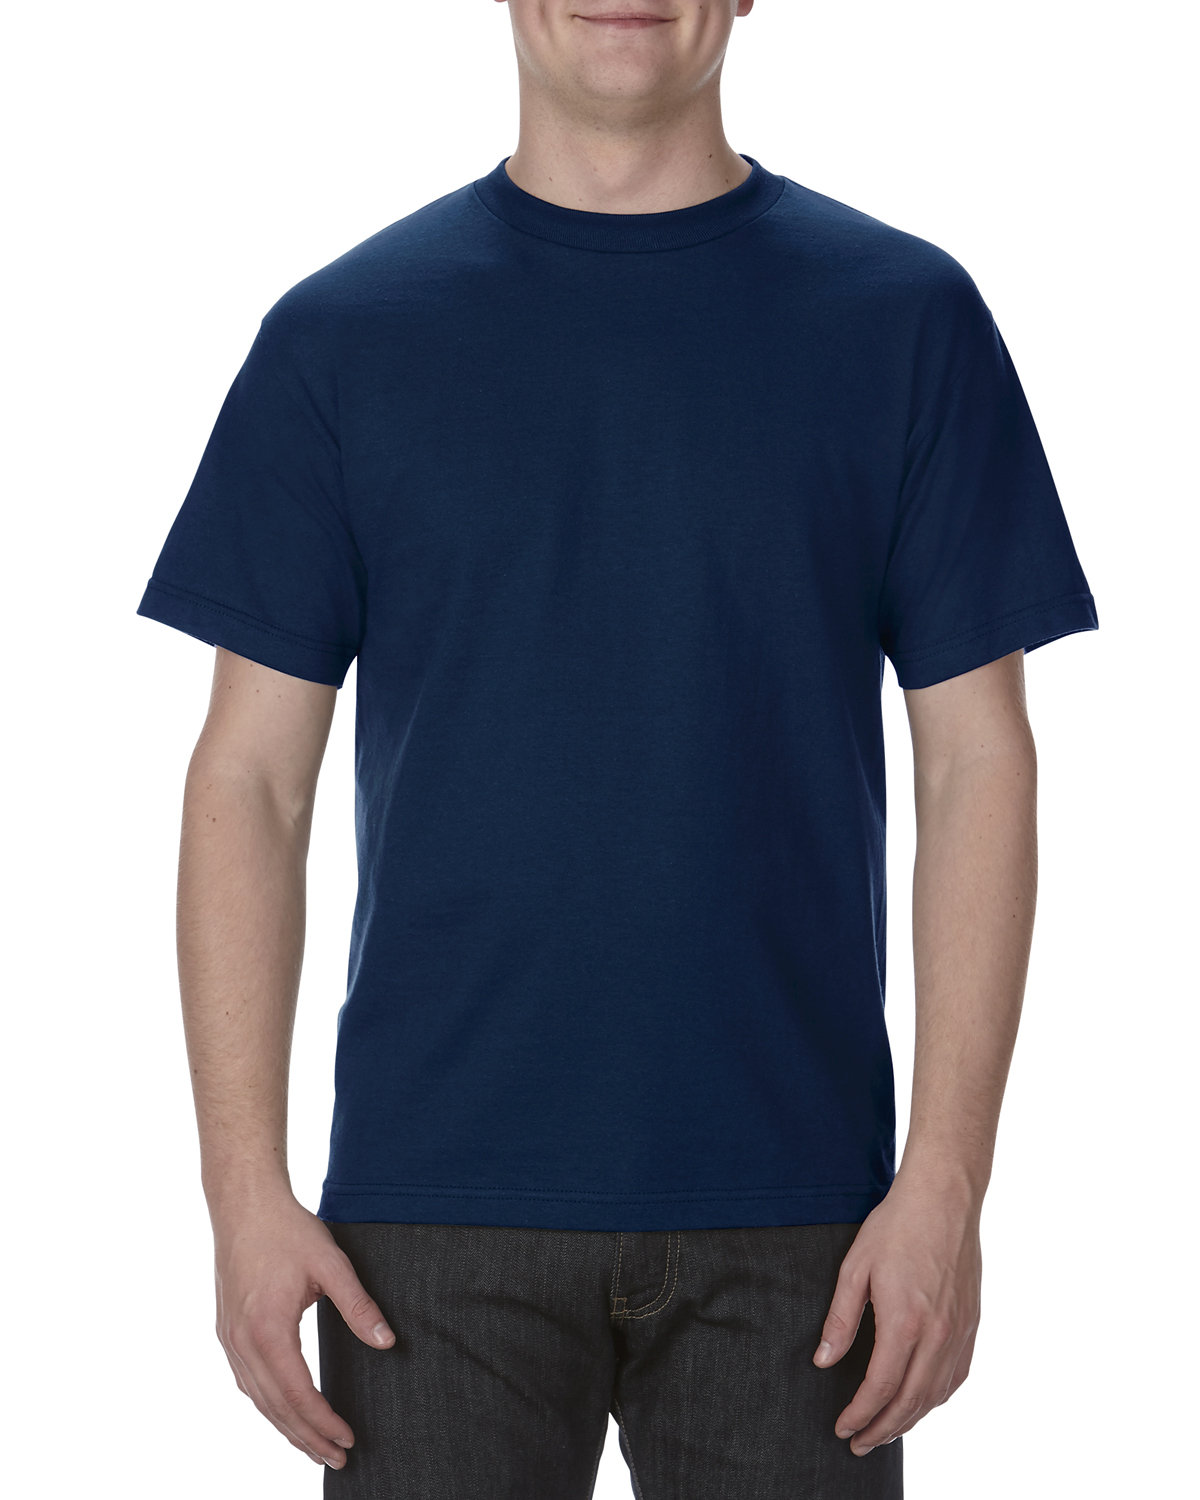 American Apparel Adult 6.0 oz., 100% Cotton T-Shirt TRUE NAVY 